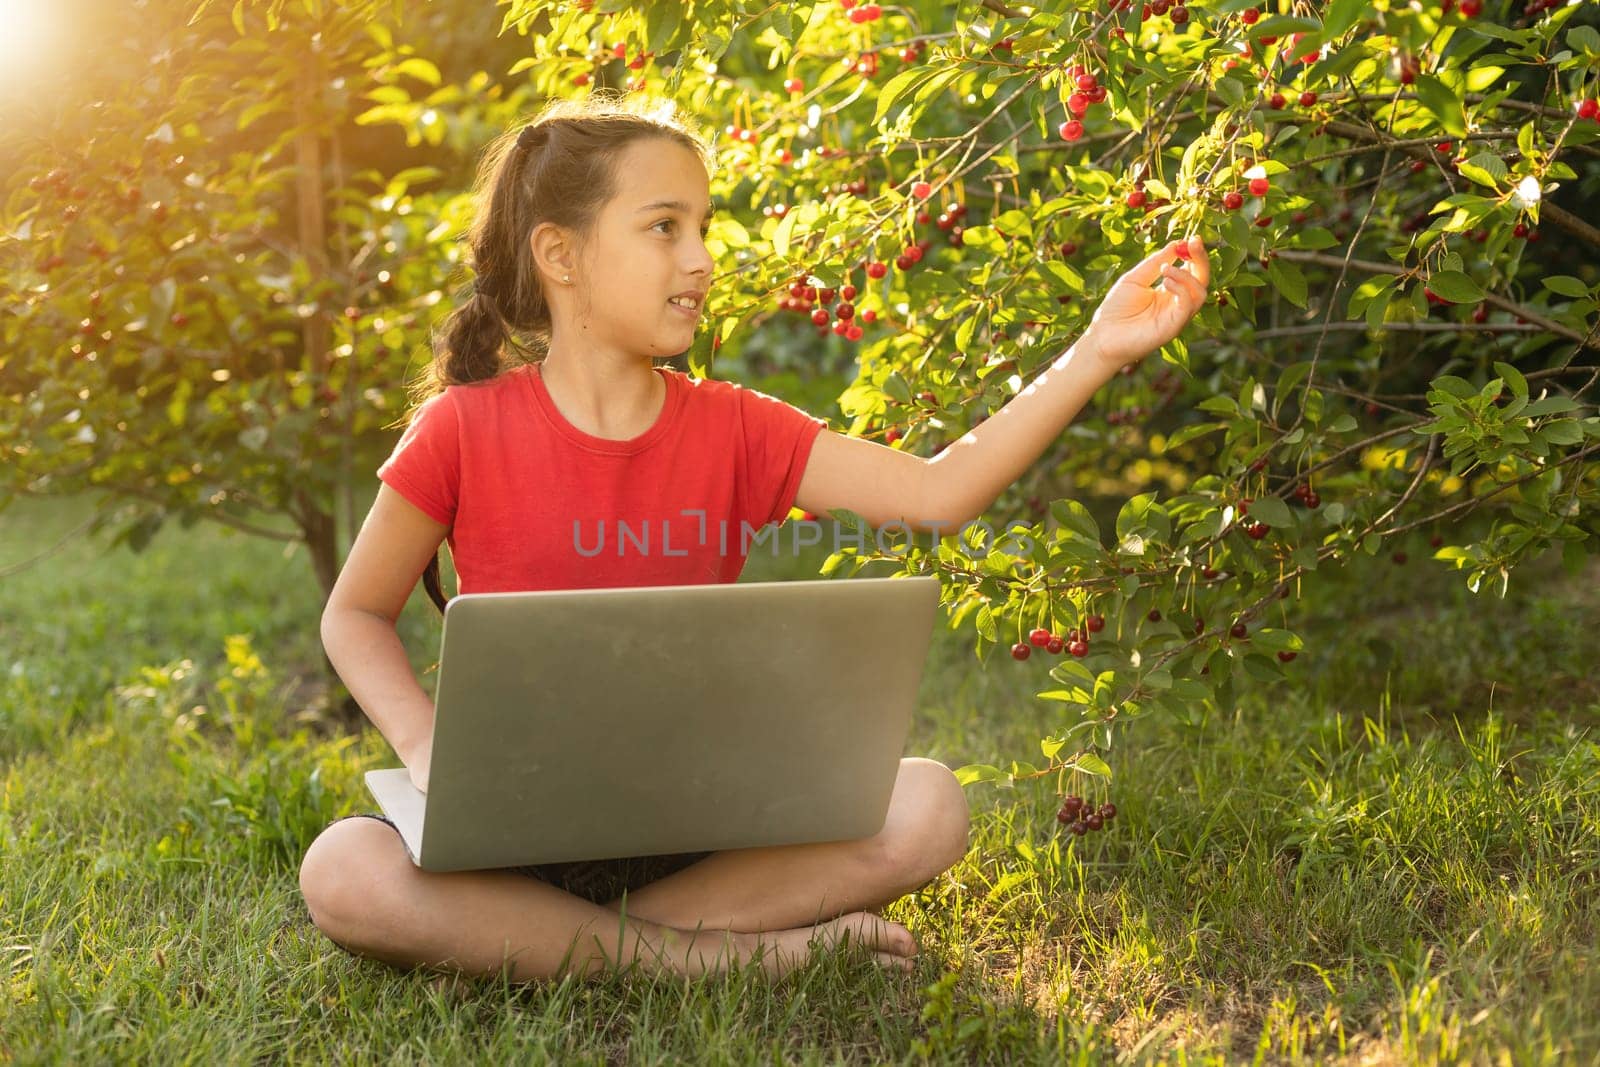 little girl usng laptop in a summer garden by Andelov13